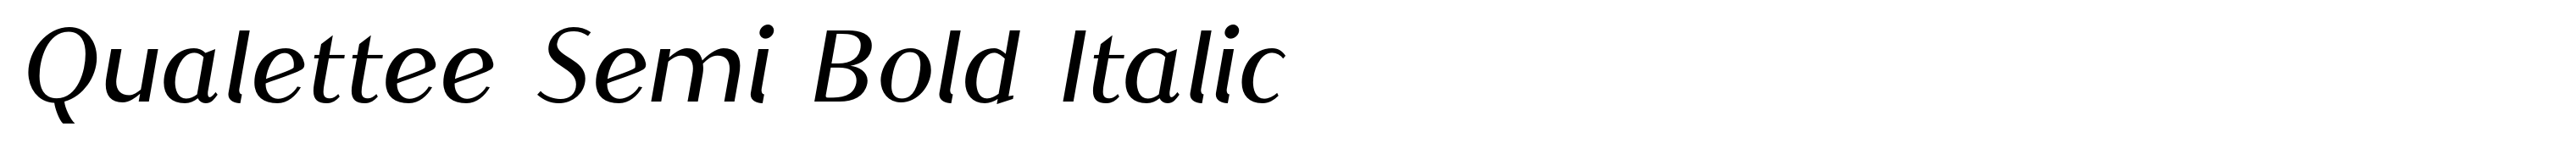 Qualettee Semi Bold Italic